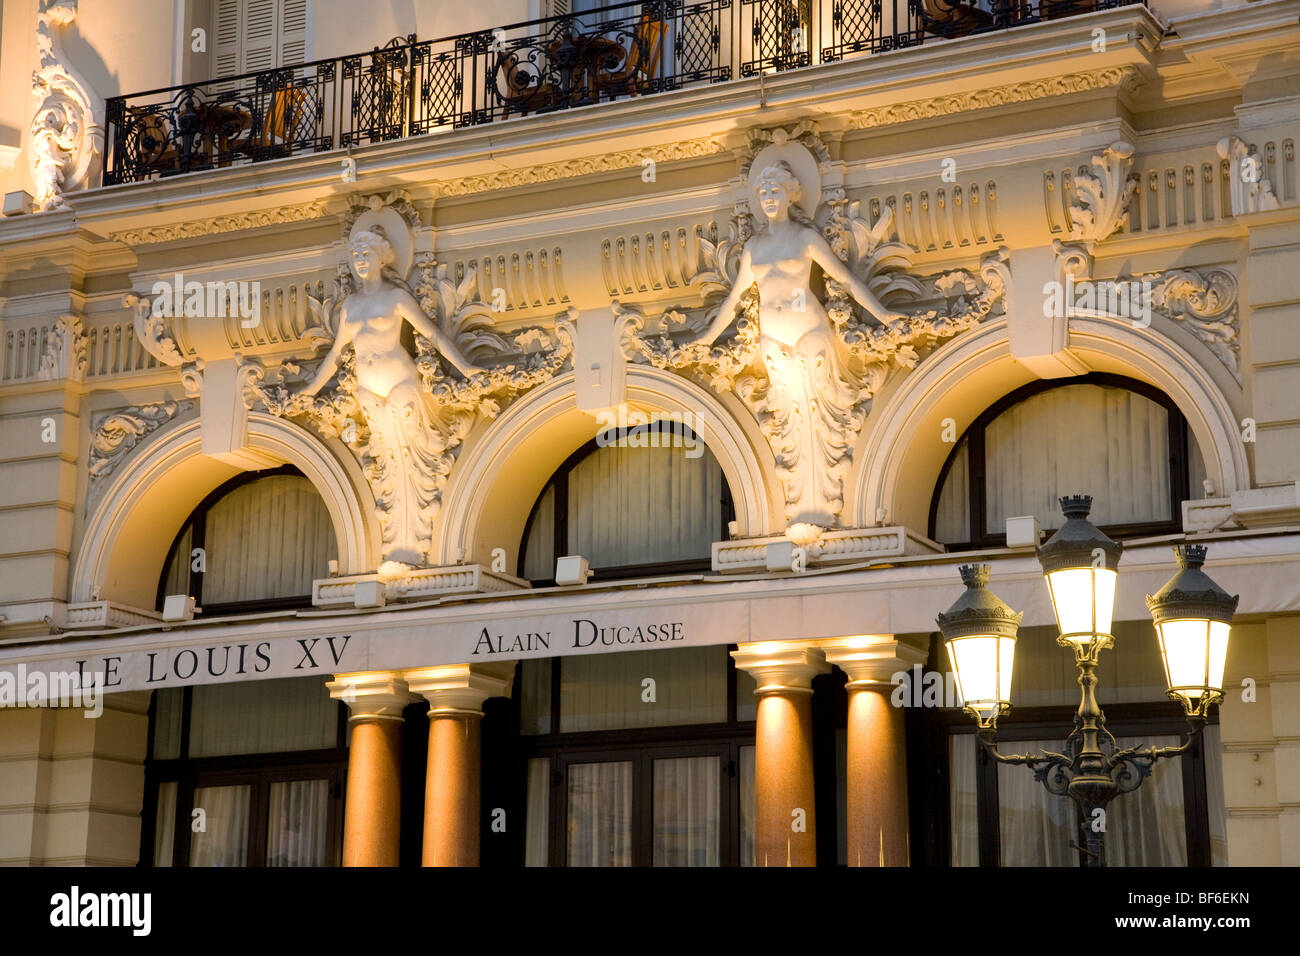 Restaurante gourmet Le Louis XV, Chefkoch Alain Ducasse, el Hotel de Paris, Monte Carlo, Monaco, Cote D Azur, Provence, Francia Foto de stock